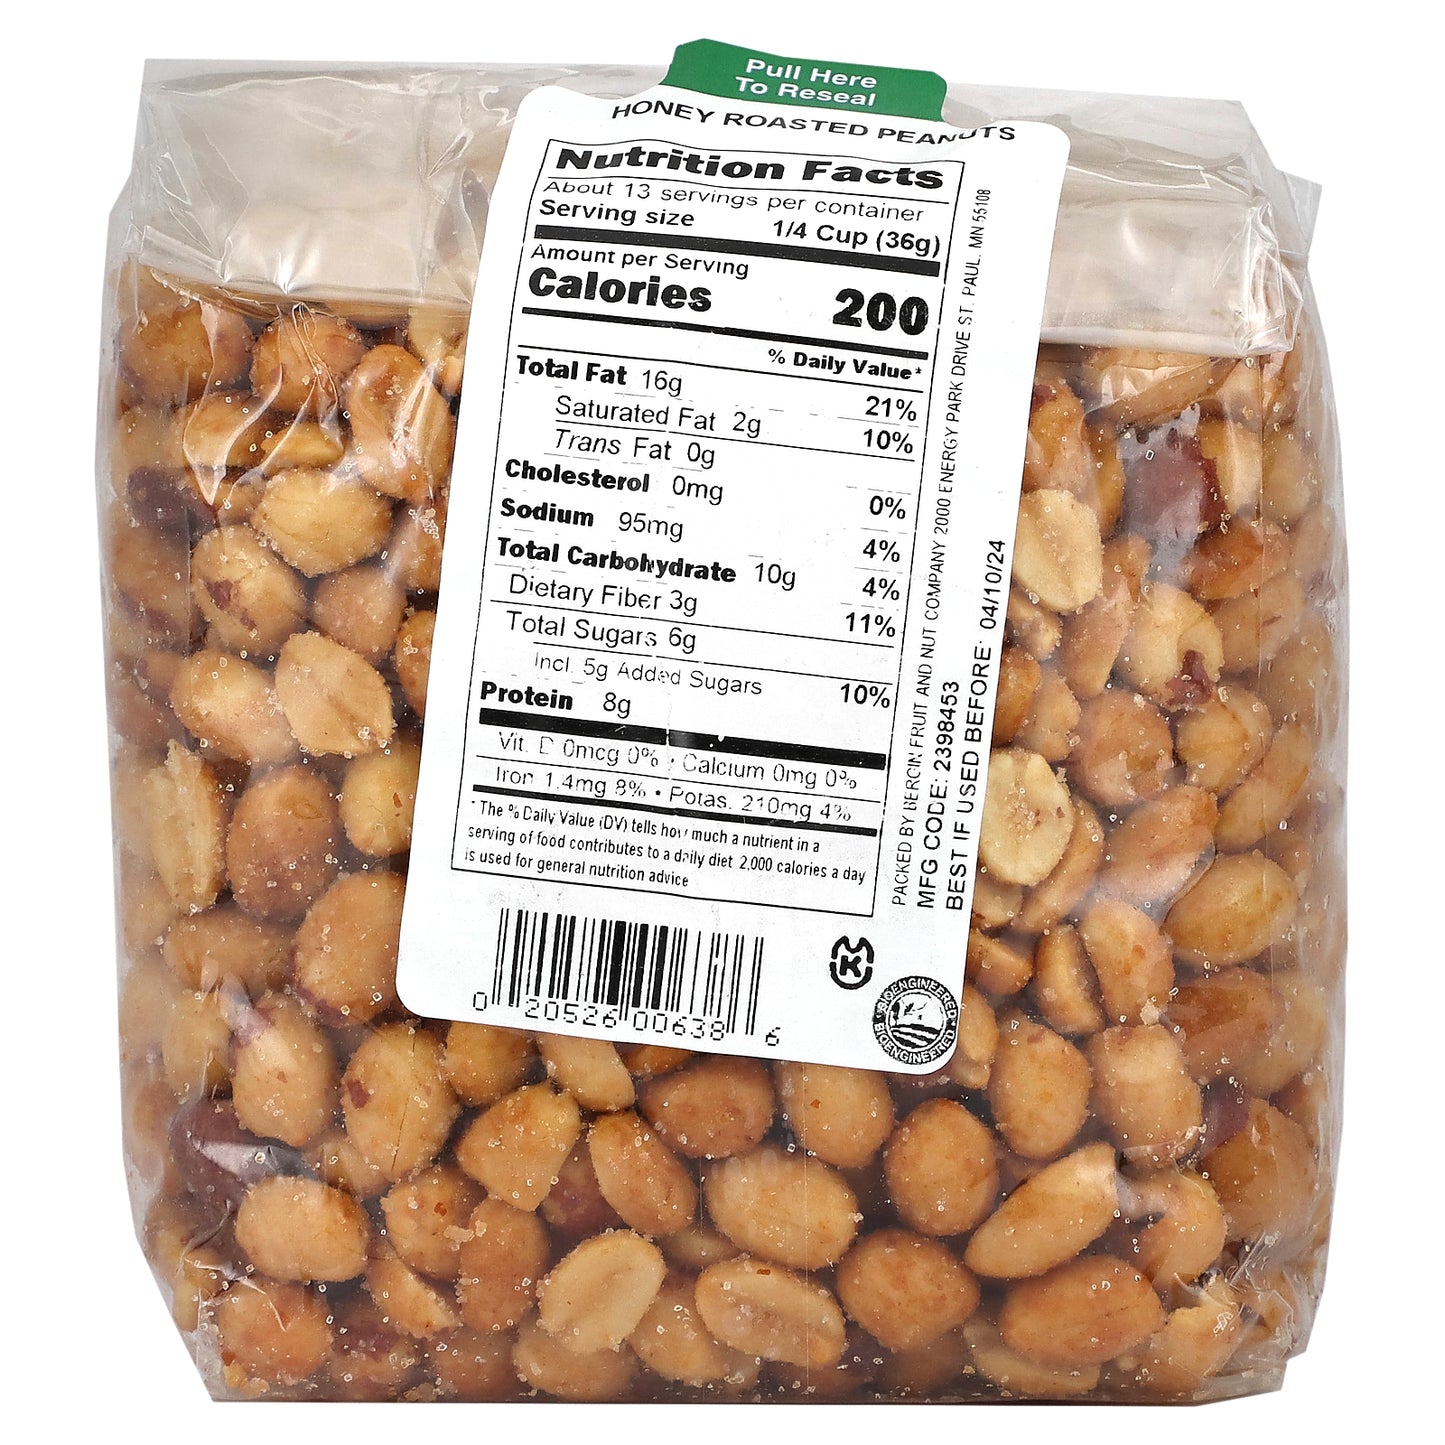 Bergin Fruit and Nut Company, Honey Roasted Peanuts, 16 oz (454 g)